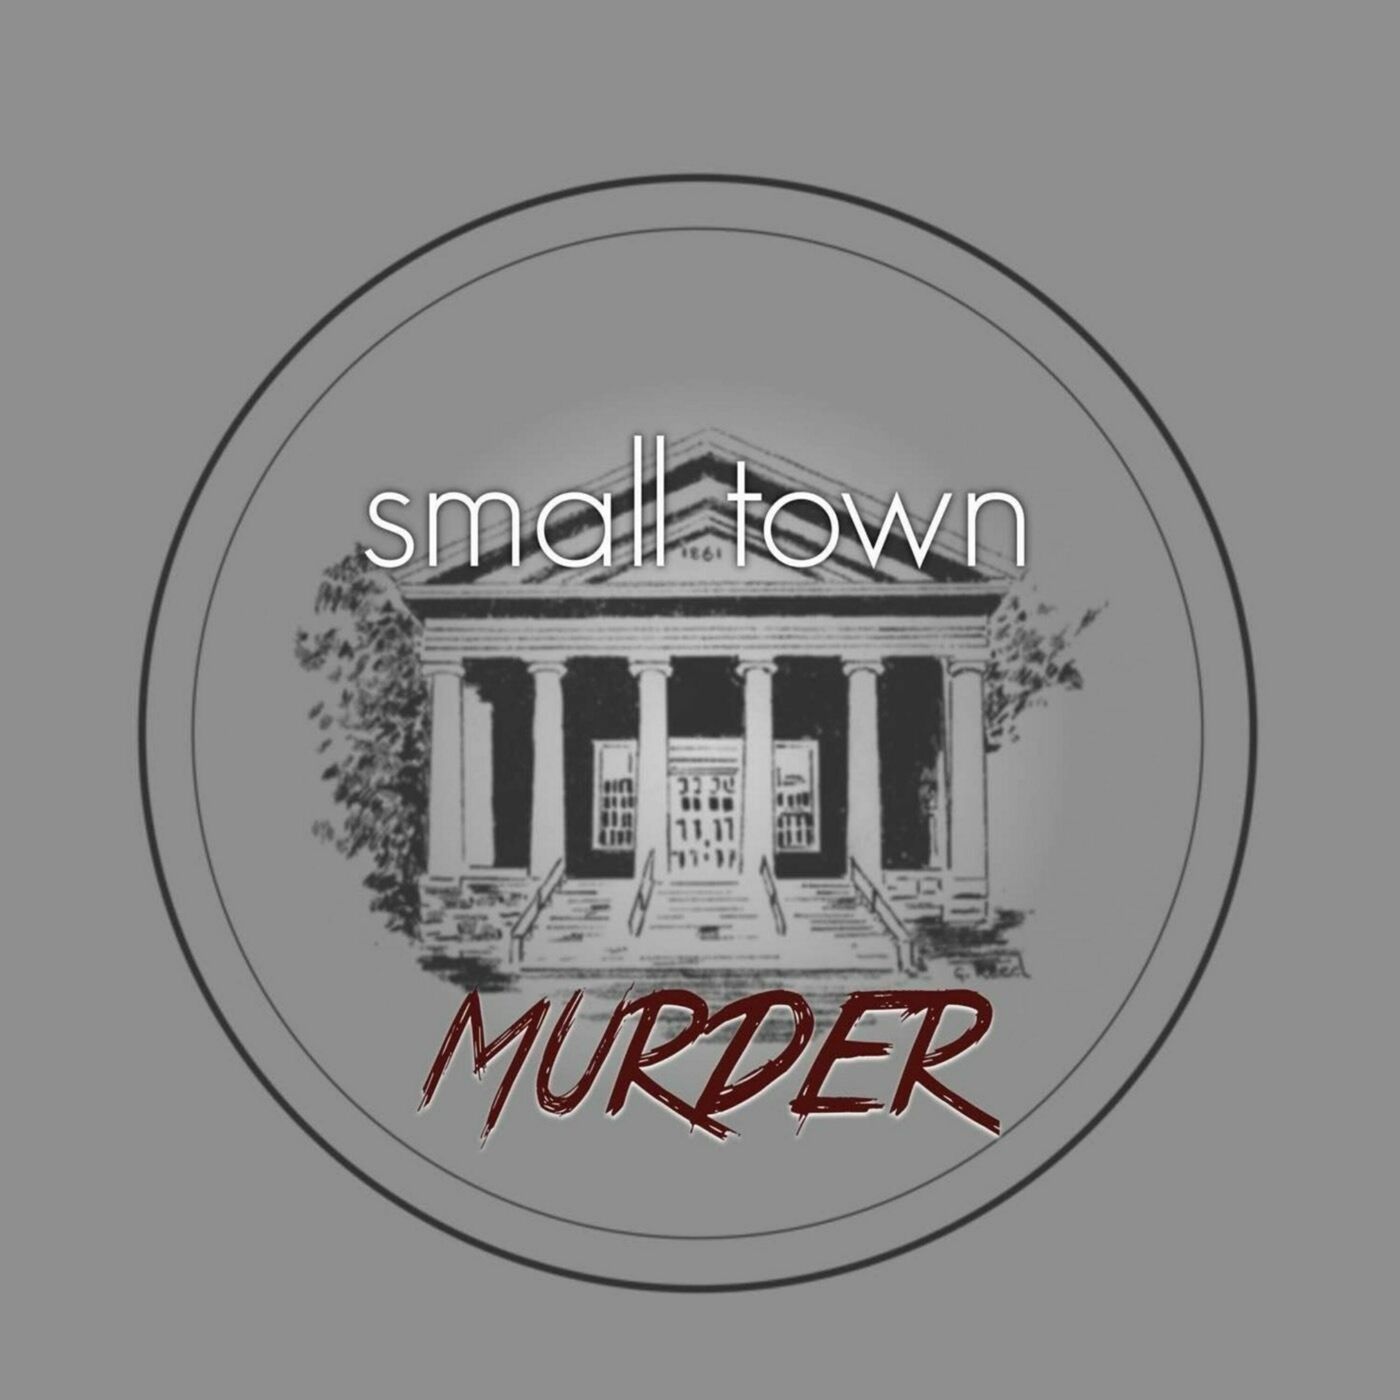 #63 - Team Murder Lunch in Edgewood, Kentucky